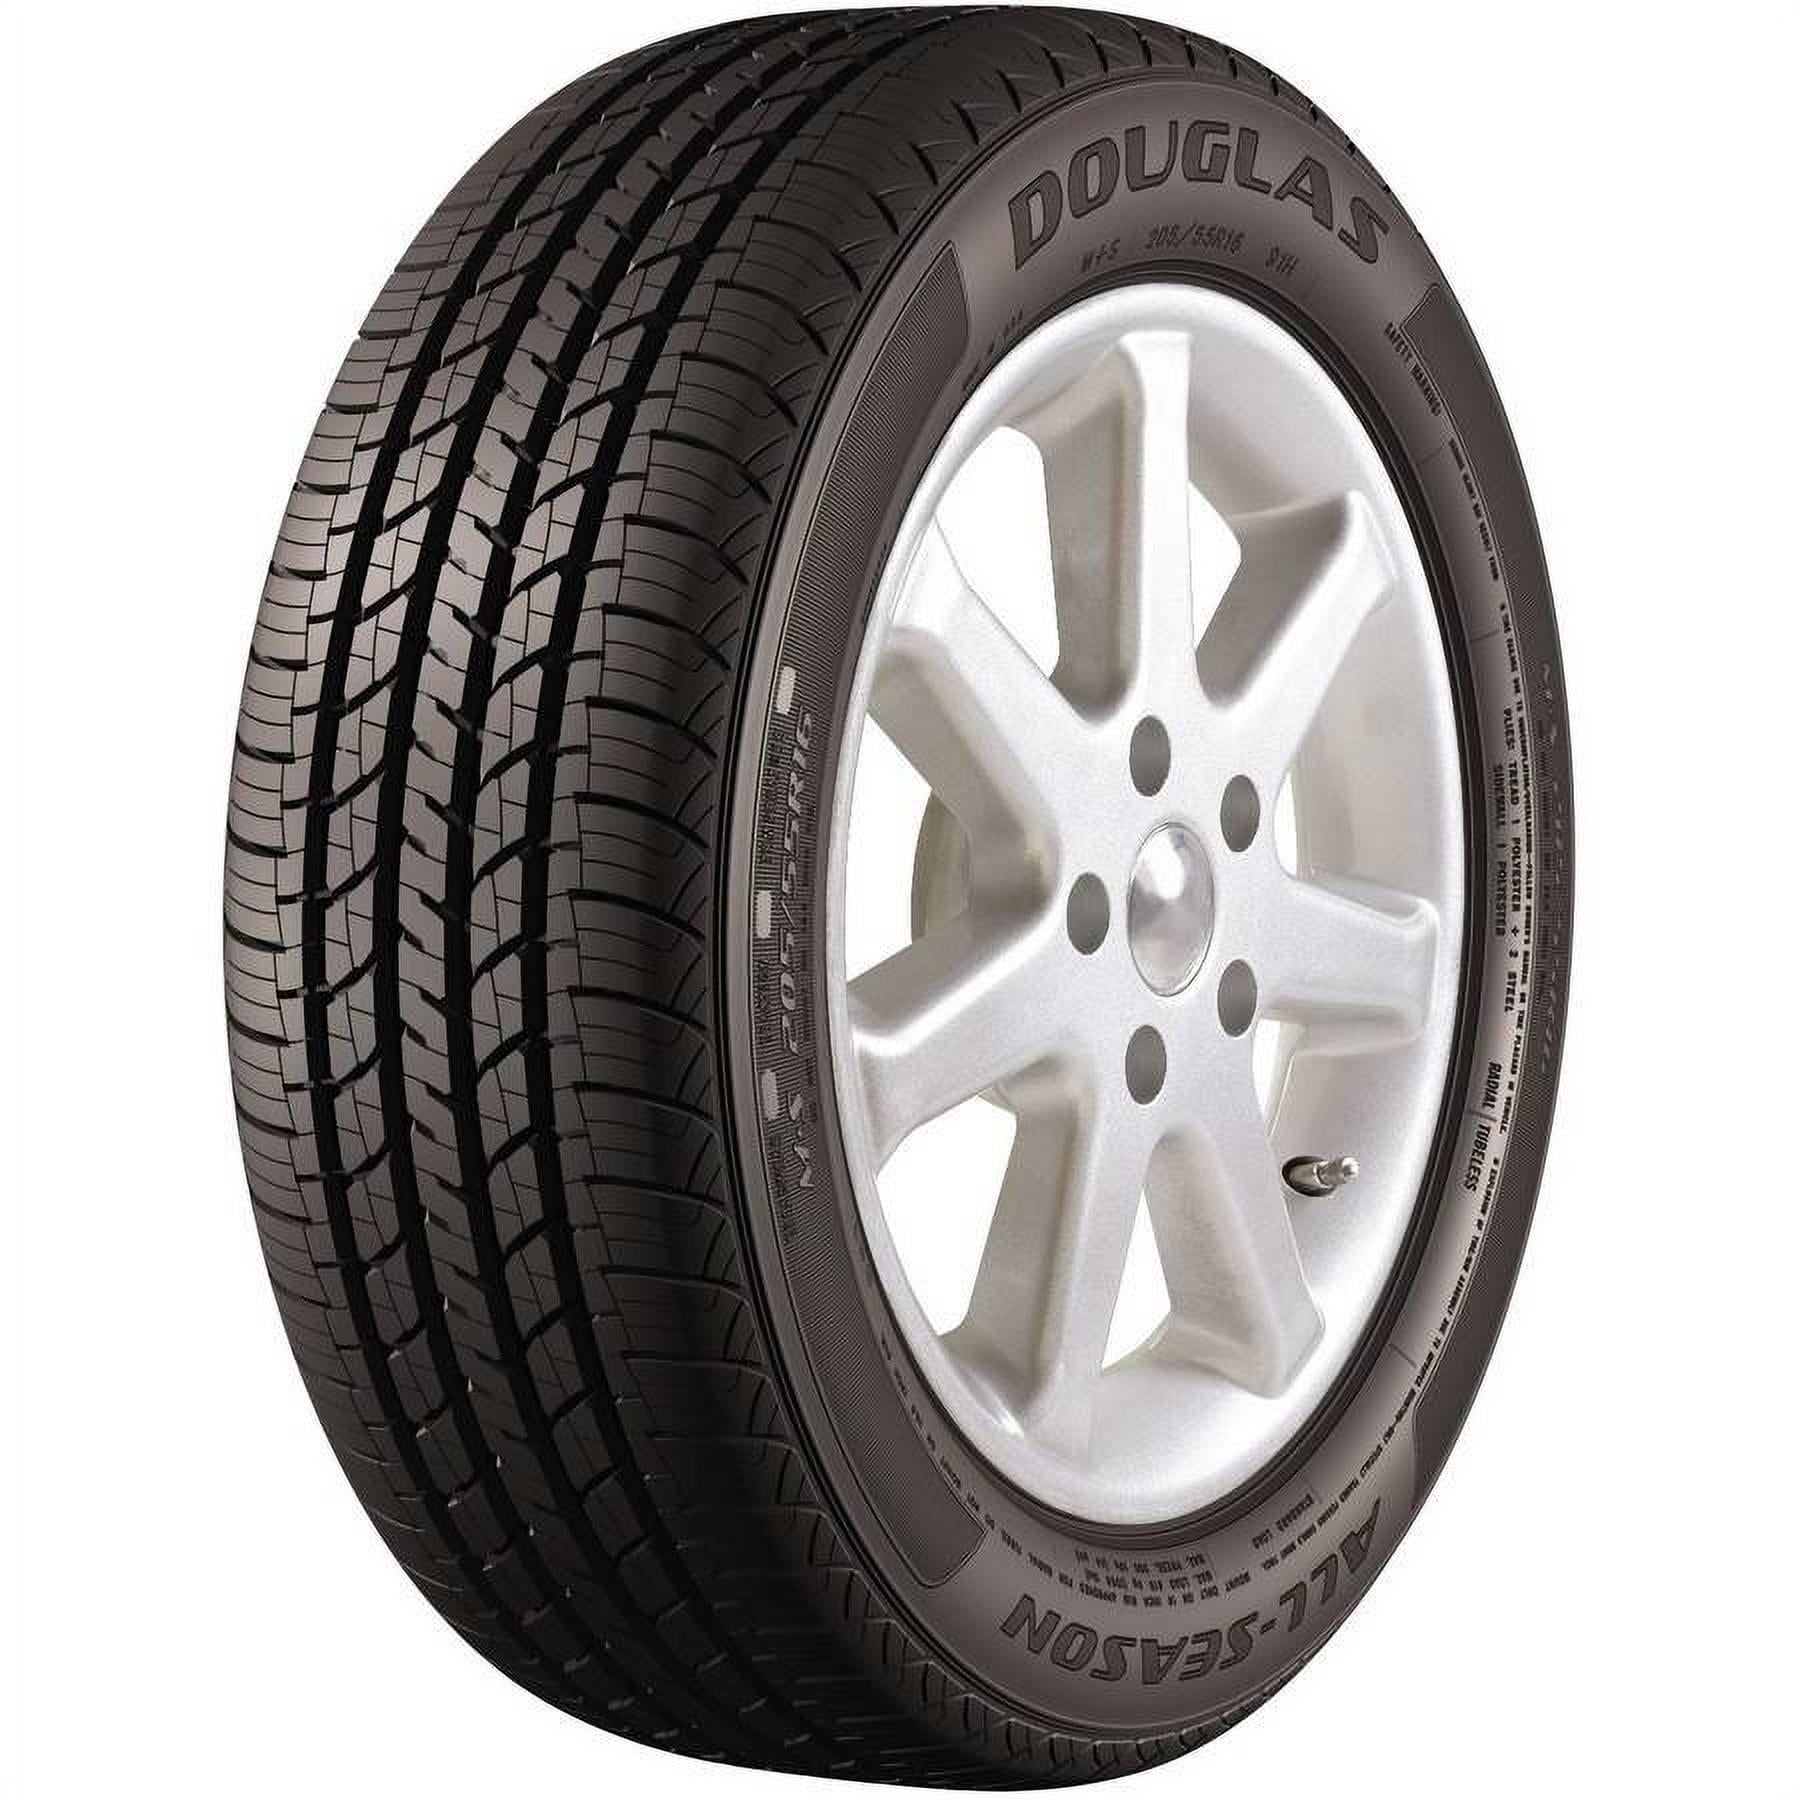 1 New LT245/75R16 Bridgestone V-Steel Rib 265 Load Range E Tire 245 75 16 245751 